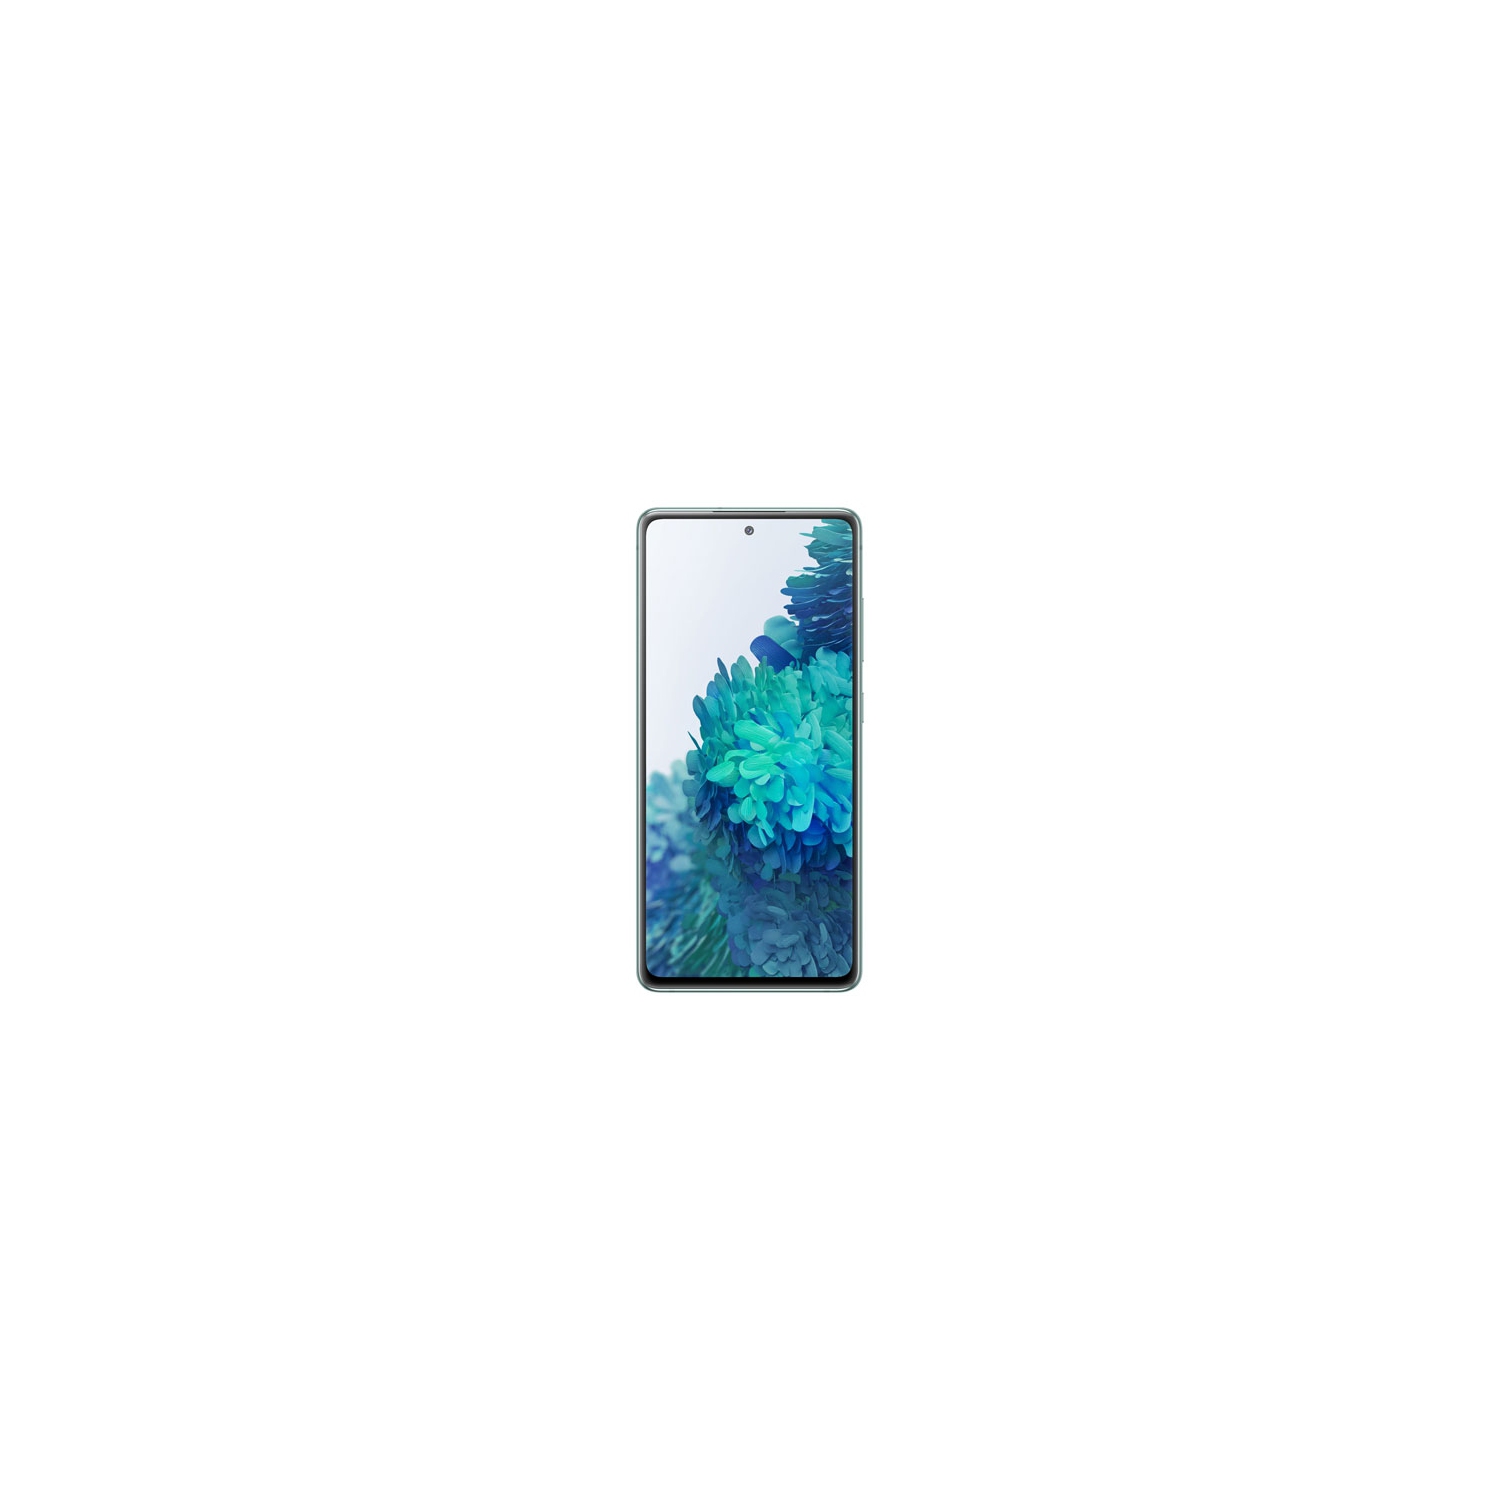 Samsung Galaxy S20 FE 128GB (SM-G780G/DS) - Factory Unlocked Smartphone - International Model - Cloud Mint - Open Box